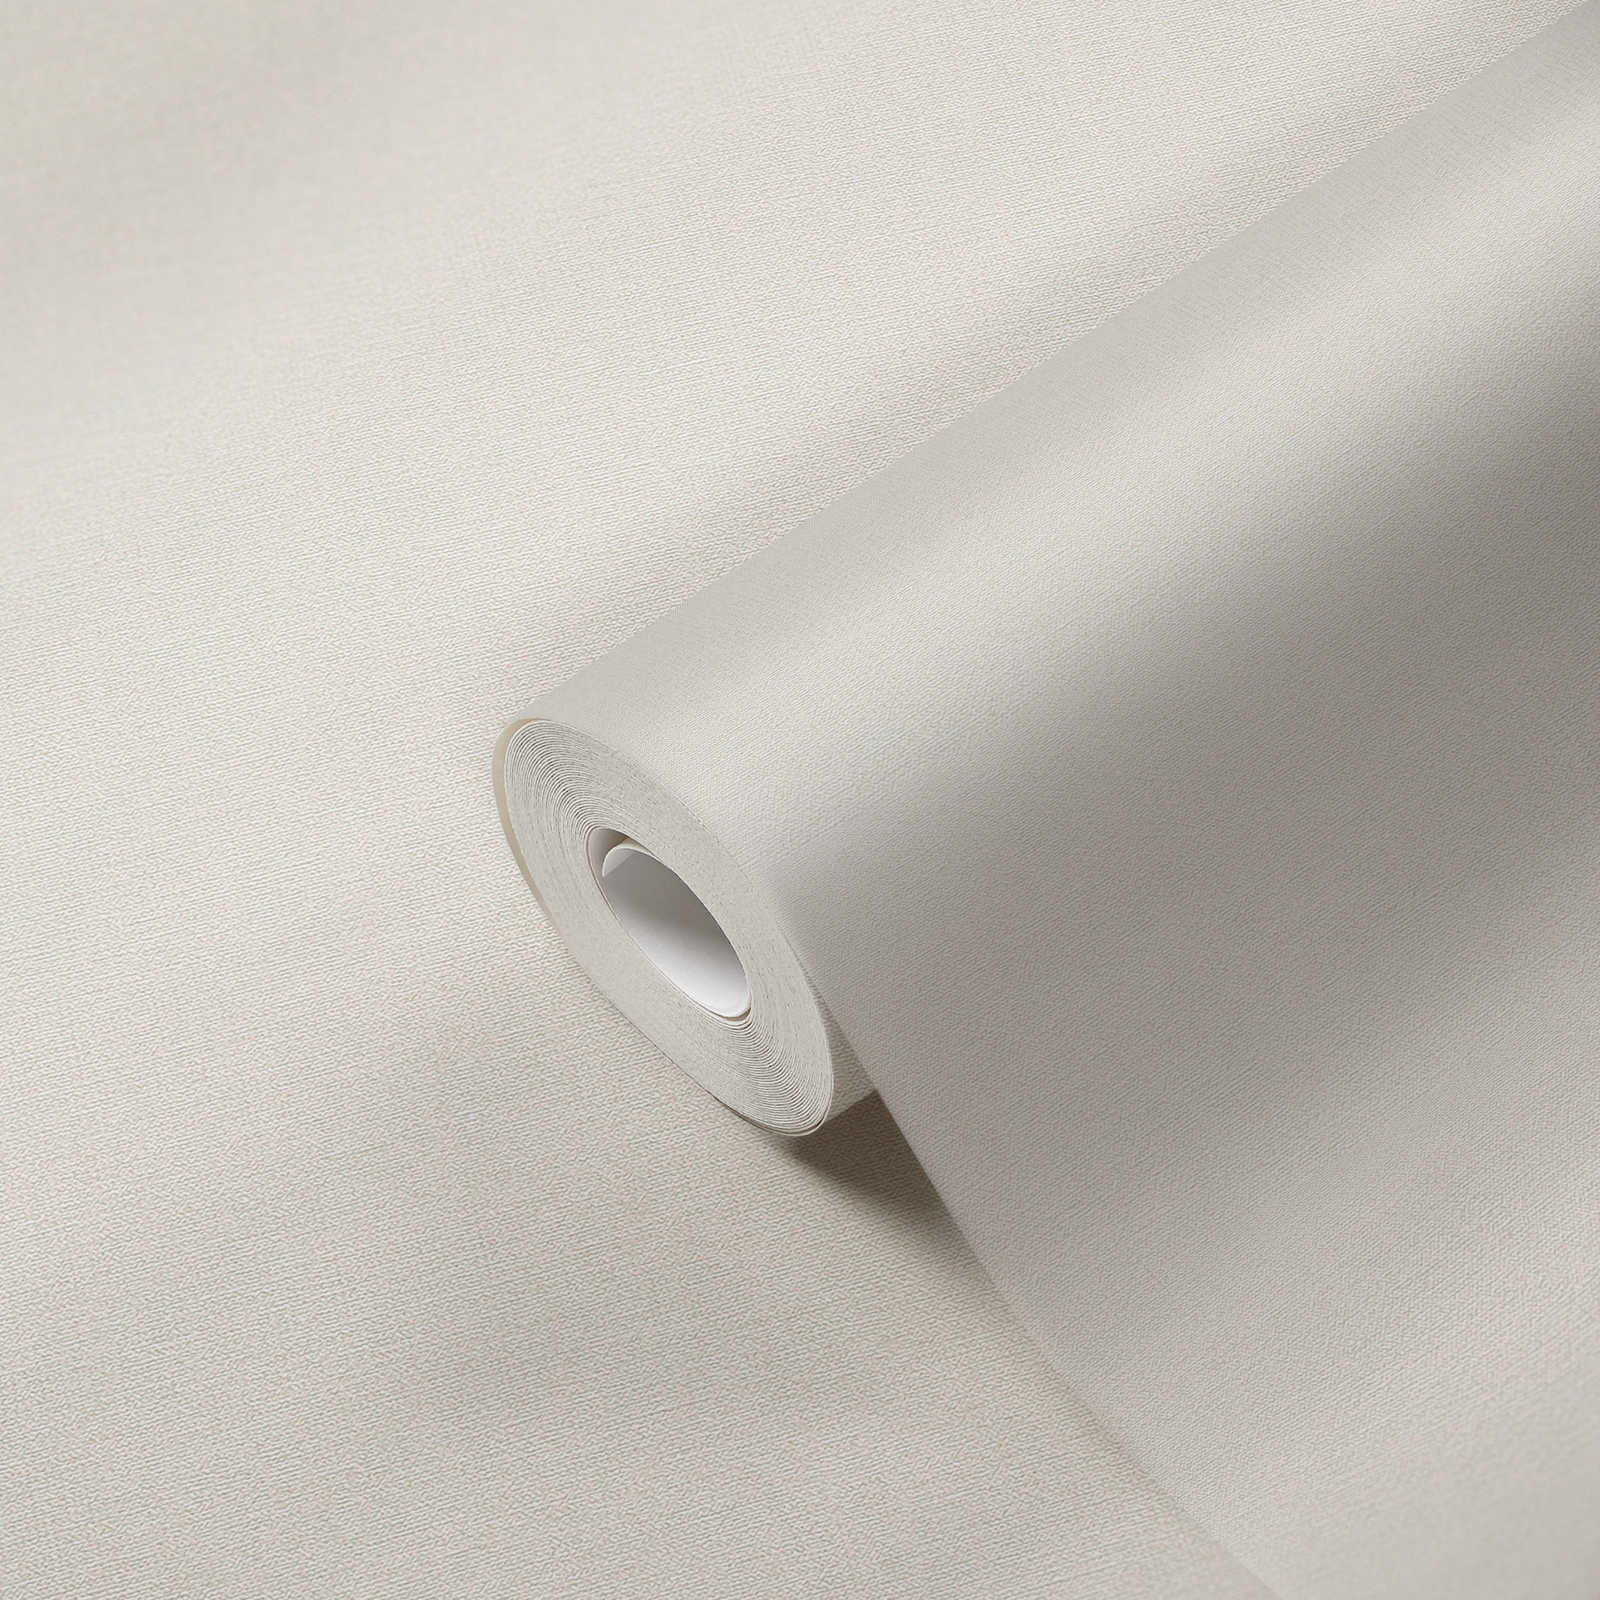             Papel pintado óptico textil diseño liso sin PVC - blanco, crema
        